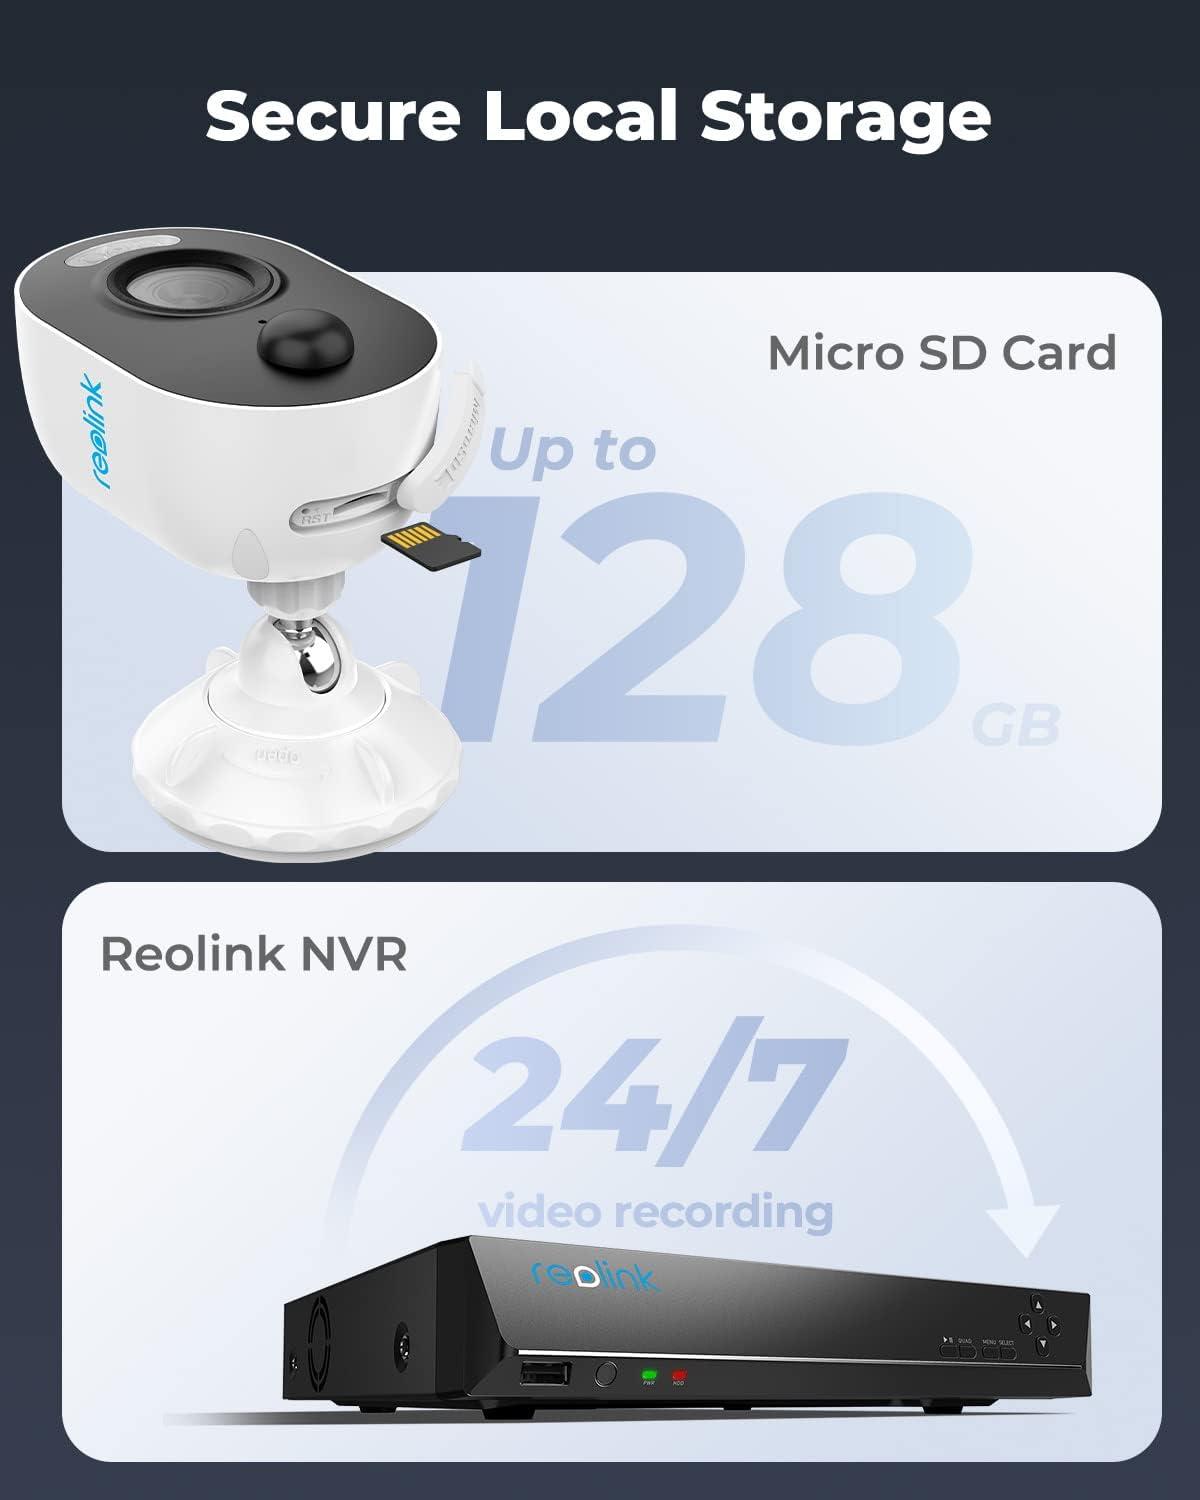 Reolink Lumus - Outdoor WiFi Security Camera with Spotlight